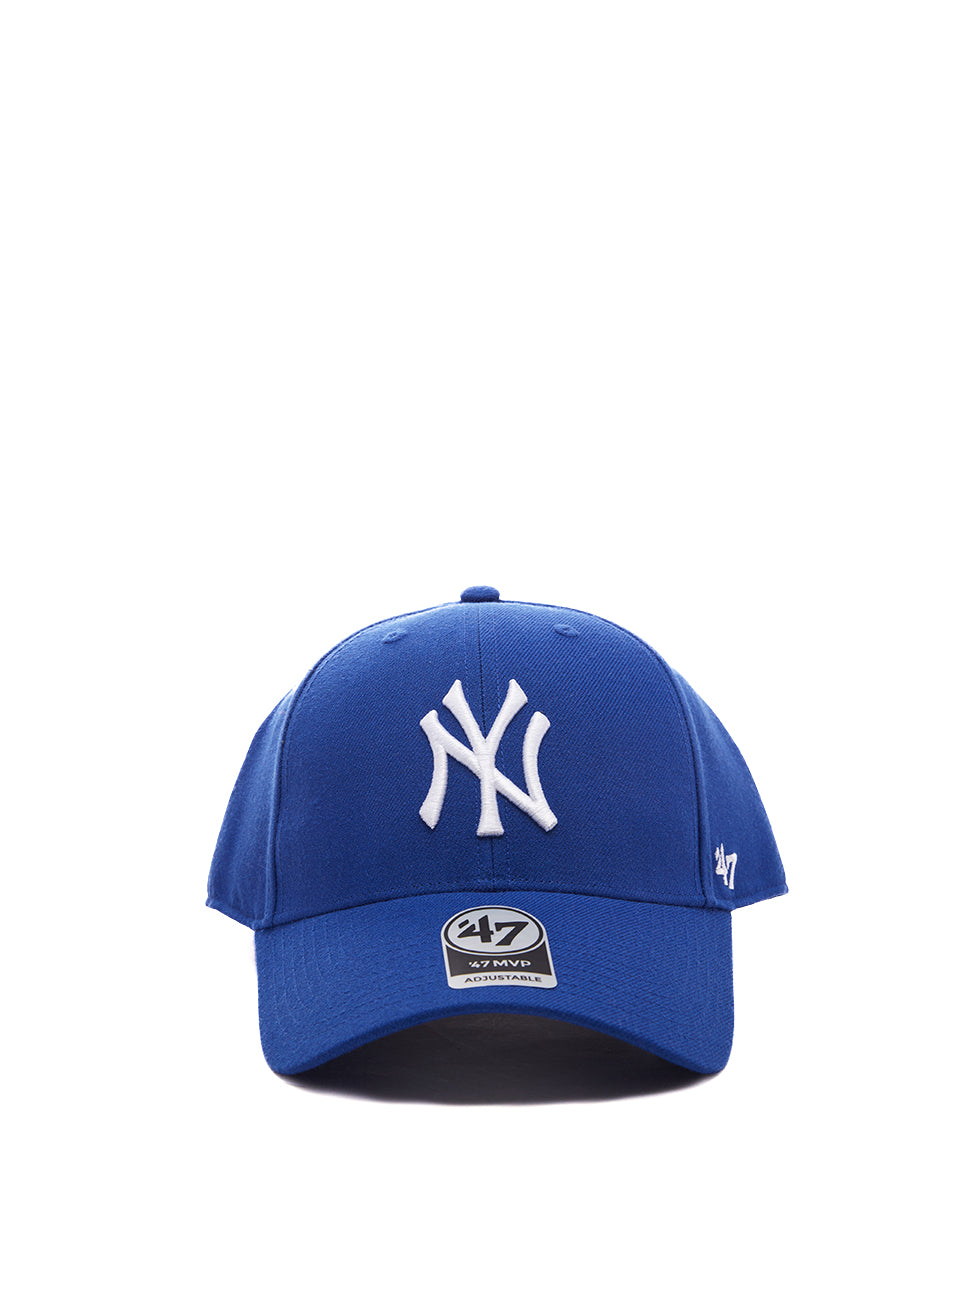 MLB DAD HAT 47 BRAND, Men's Fashion, Watches & Accessories, Caps